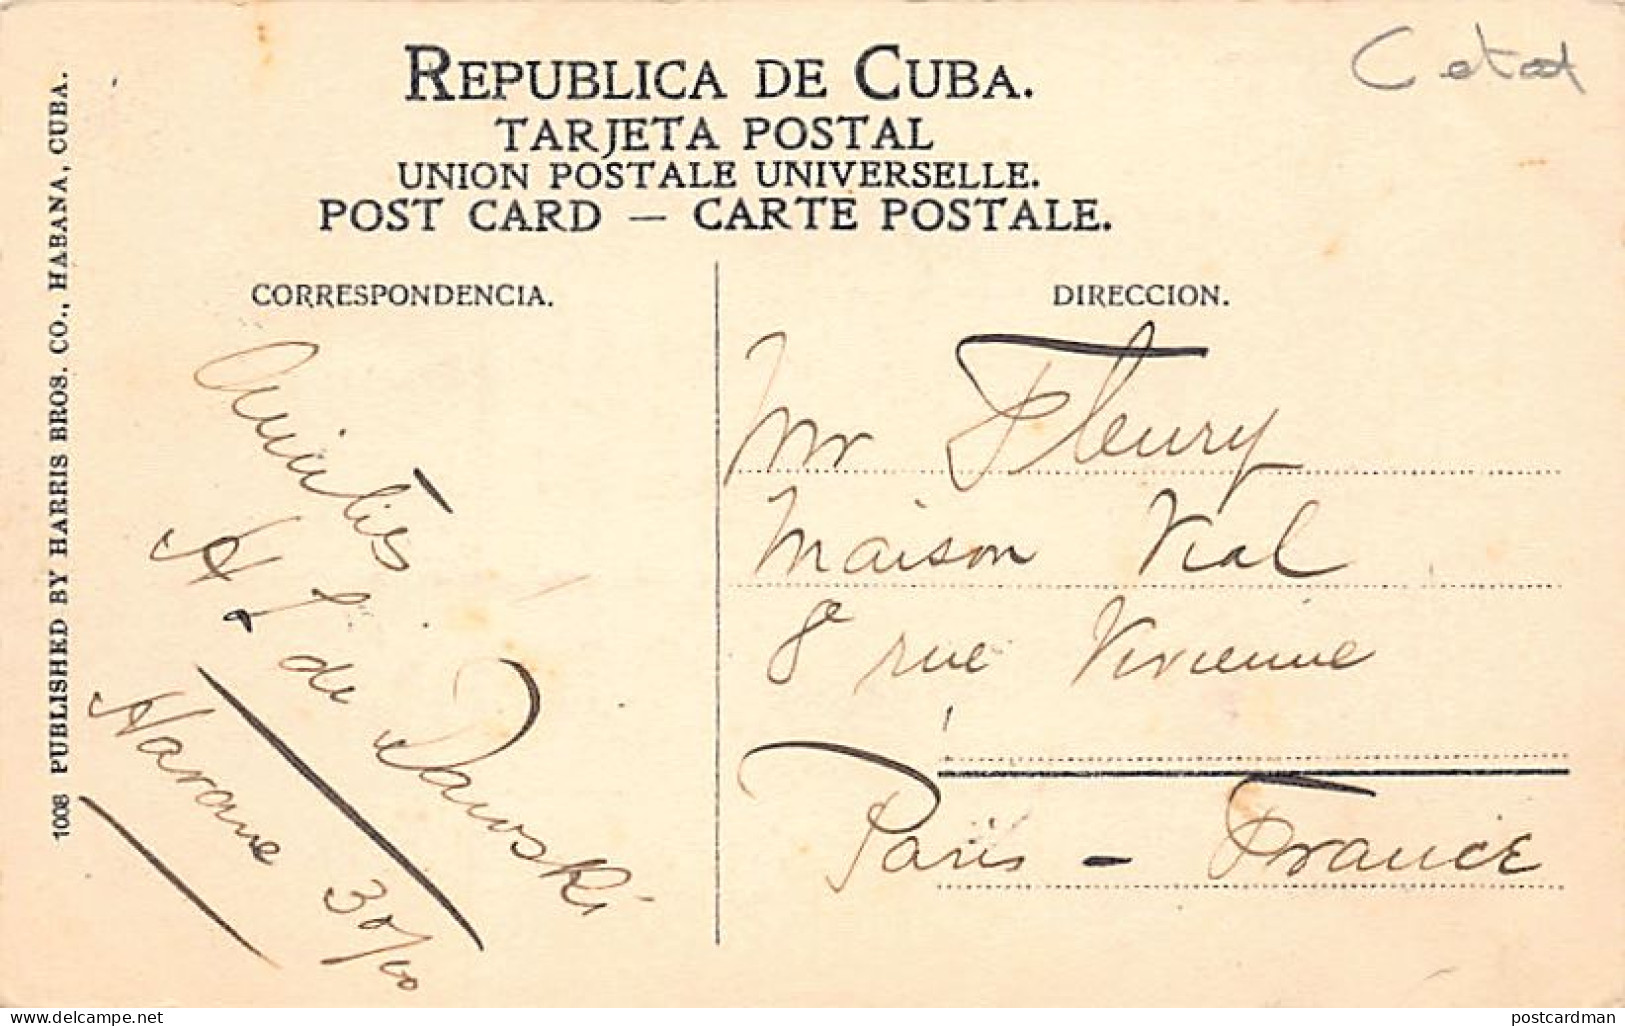 Cuba - LA HABANA - Custom House Ed. Harris Bros. Co. 1008 - Cuba